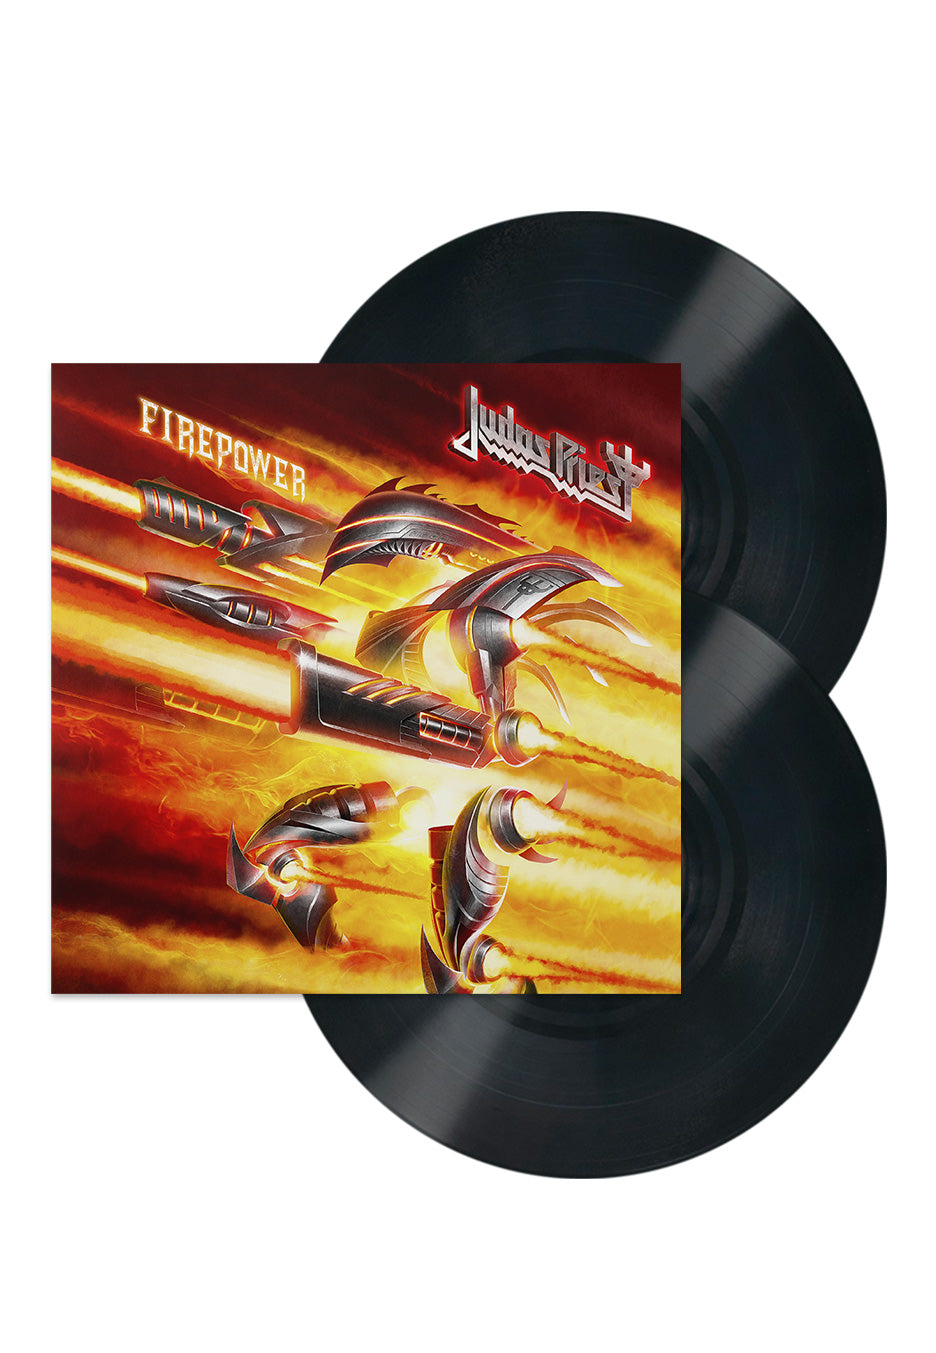 Judas Priest - Firepower - 2 Vinyl